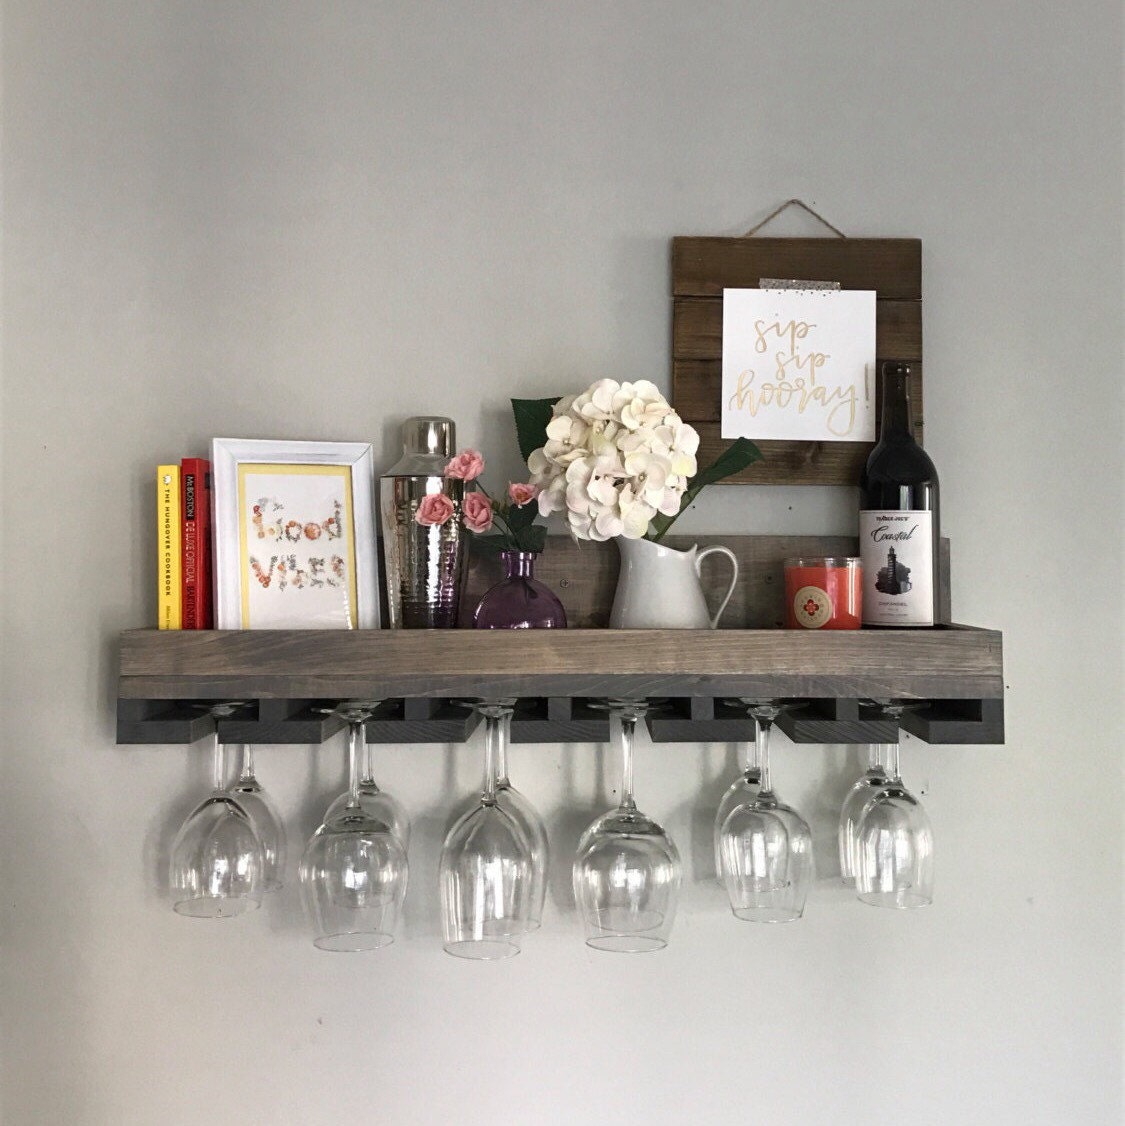 Wood Wine Rack Shelves | The Ryan Wall Mounted Shelf & Hanging Stemware Glass Holder Organizer Bar Unique Rustic Shelvez